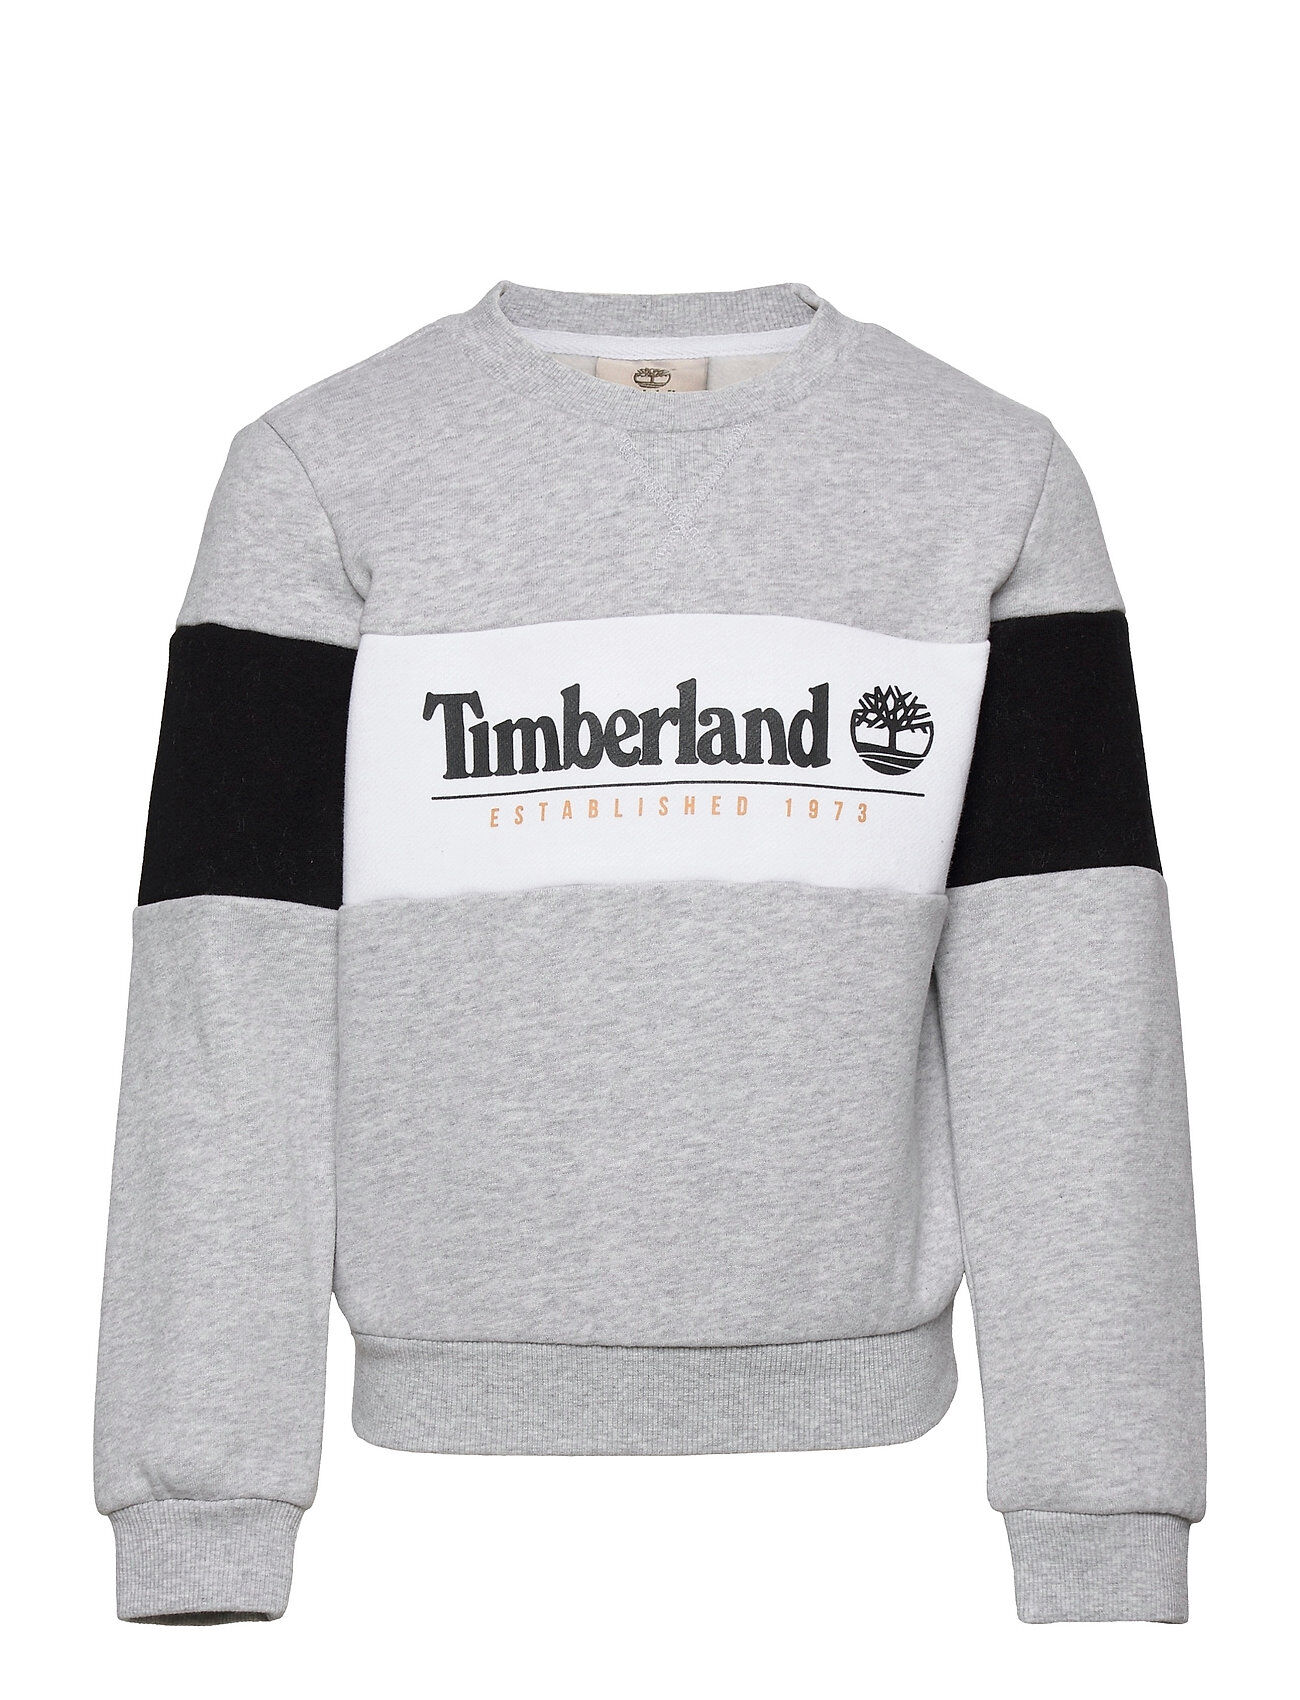 Timberland Sweatshirt Sweat-shirt Genser Grå Timberland